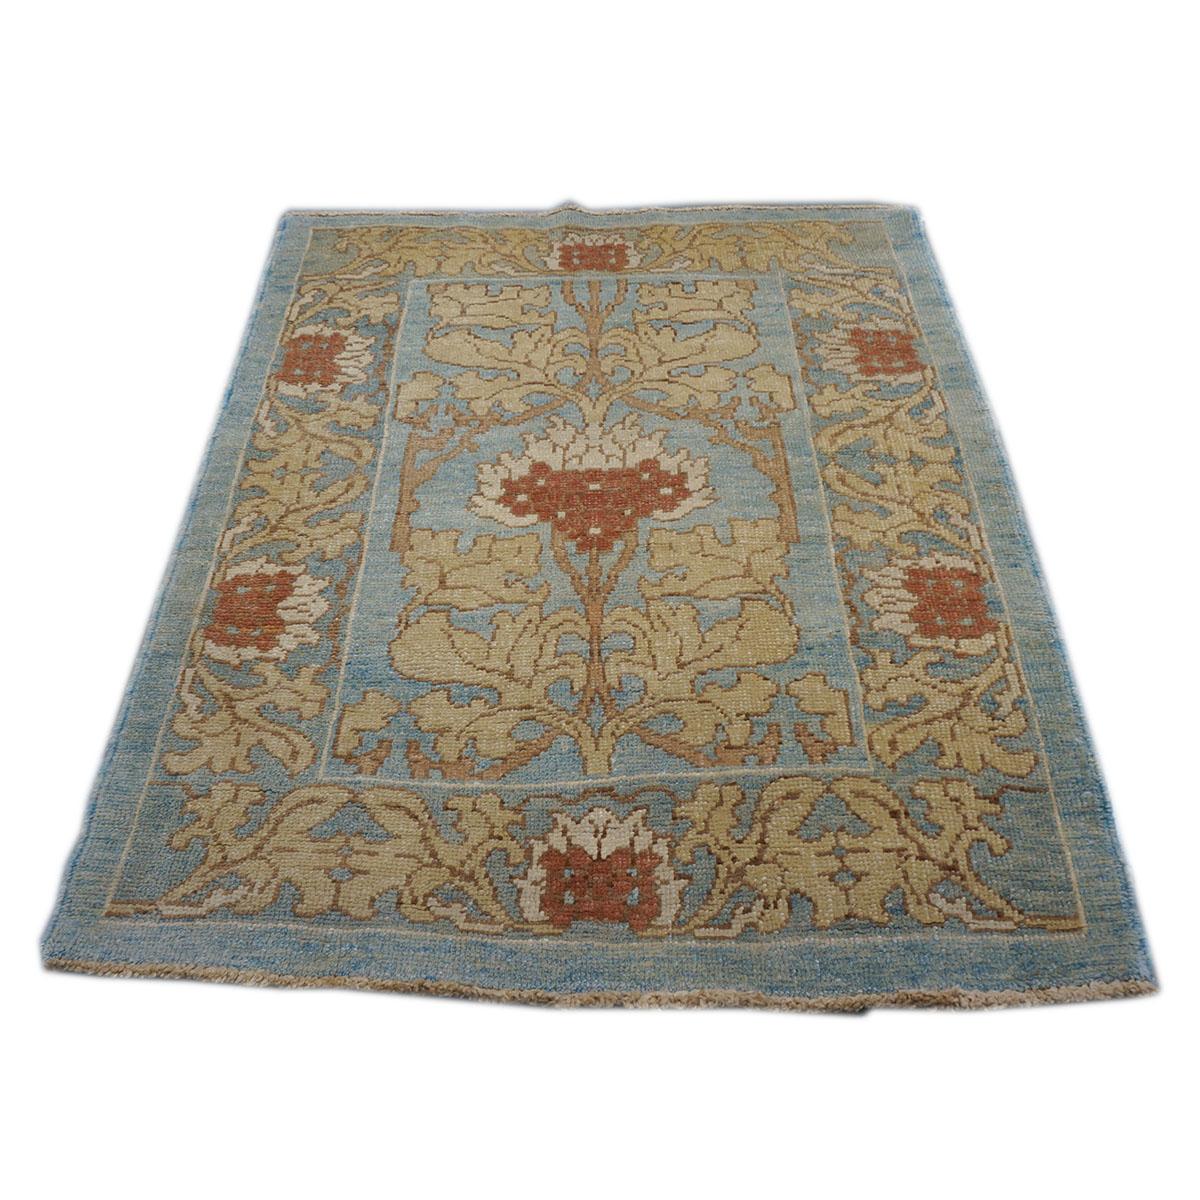 Turkish 21st Century William Morris Donegal Carpet 4.4x5.7 Light Blue, Tan, & Rust For Sale